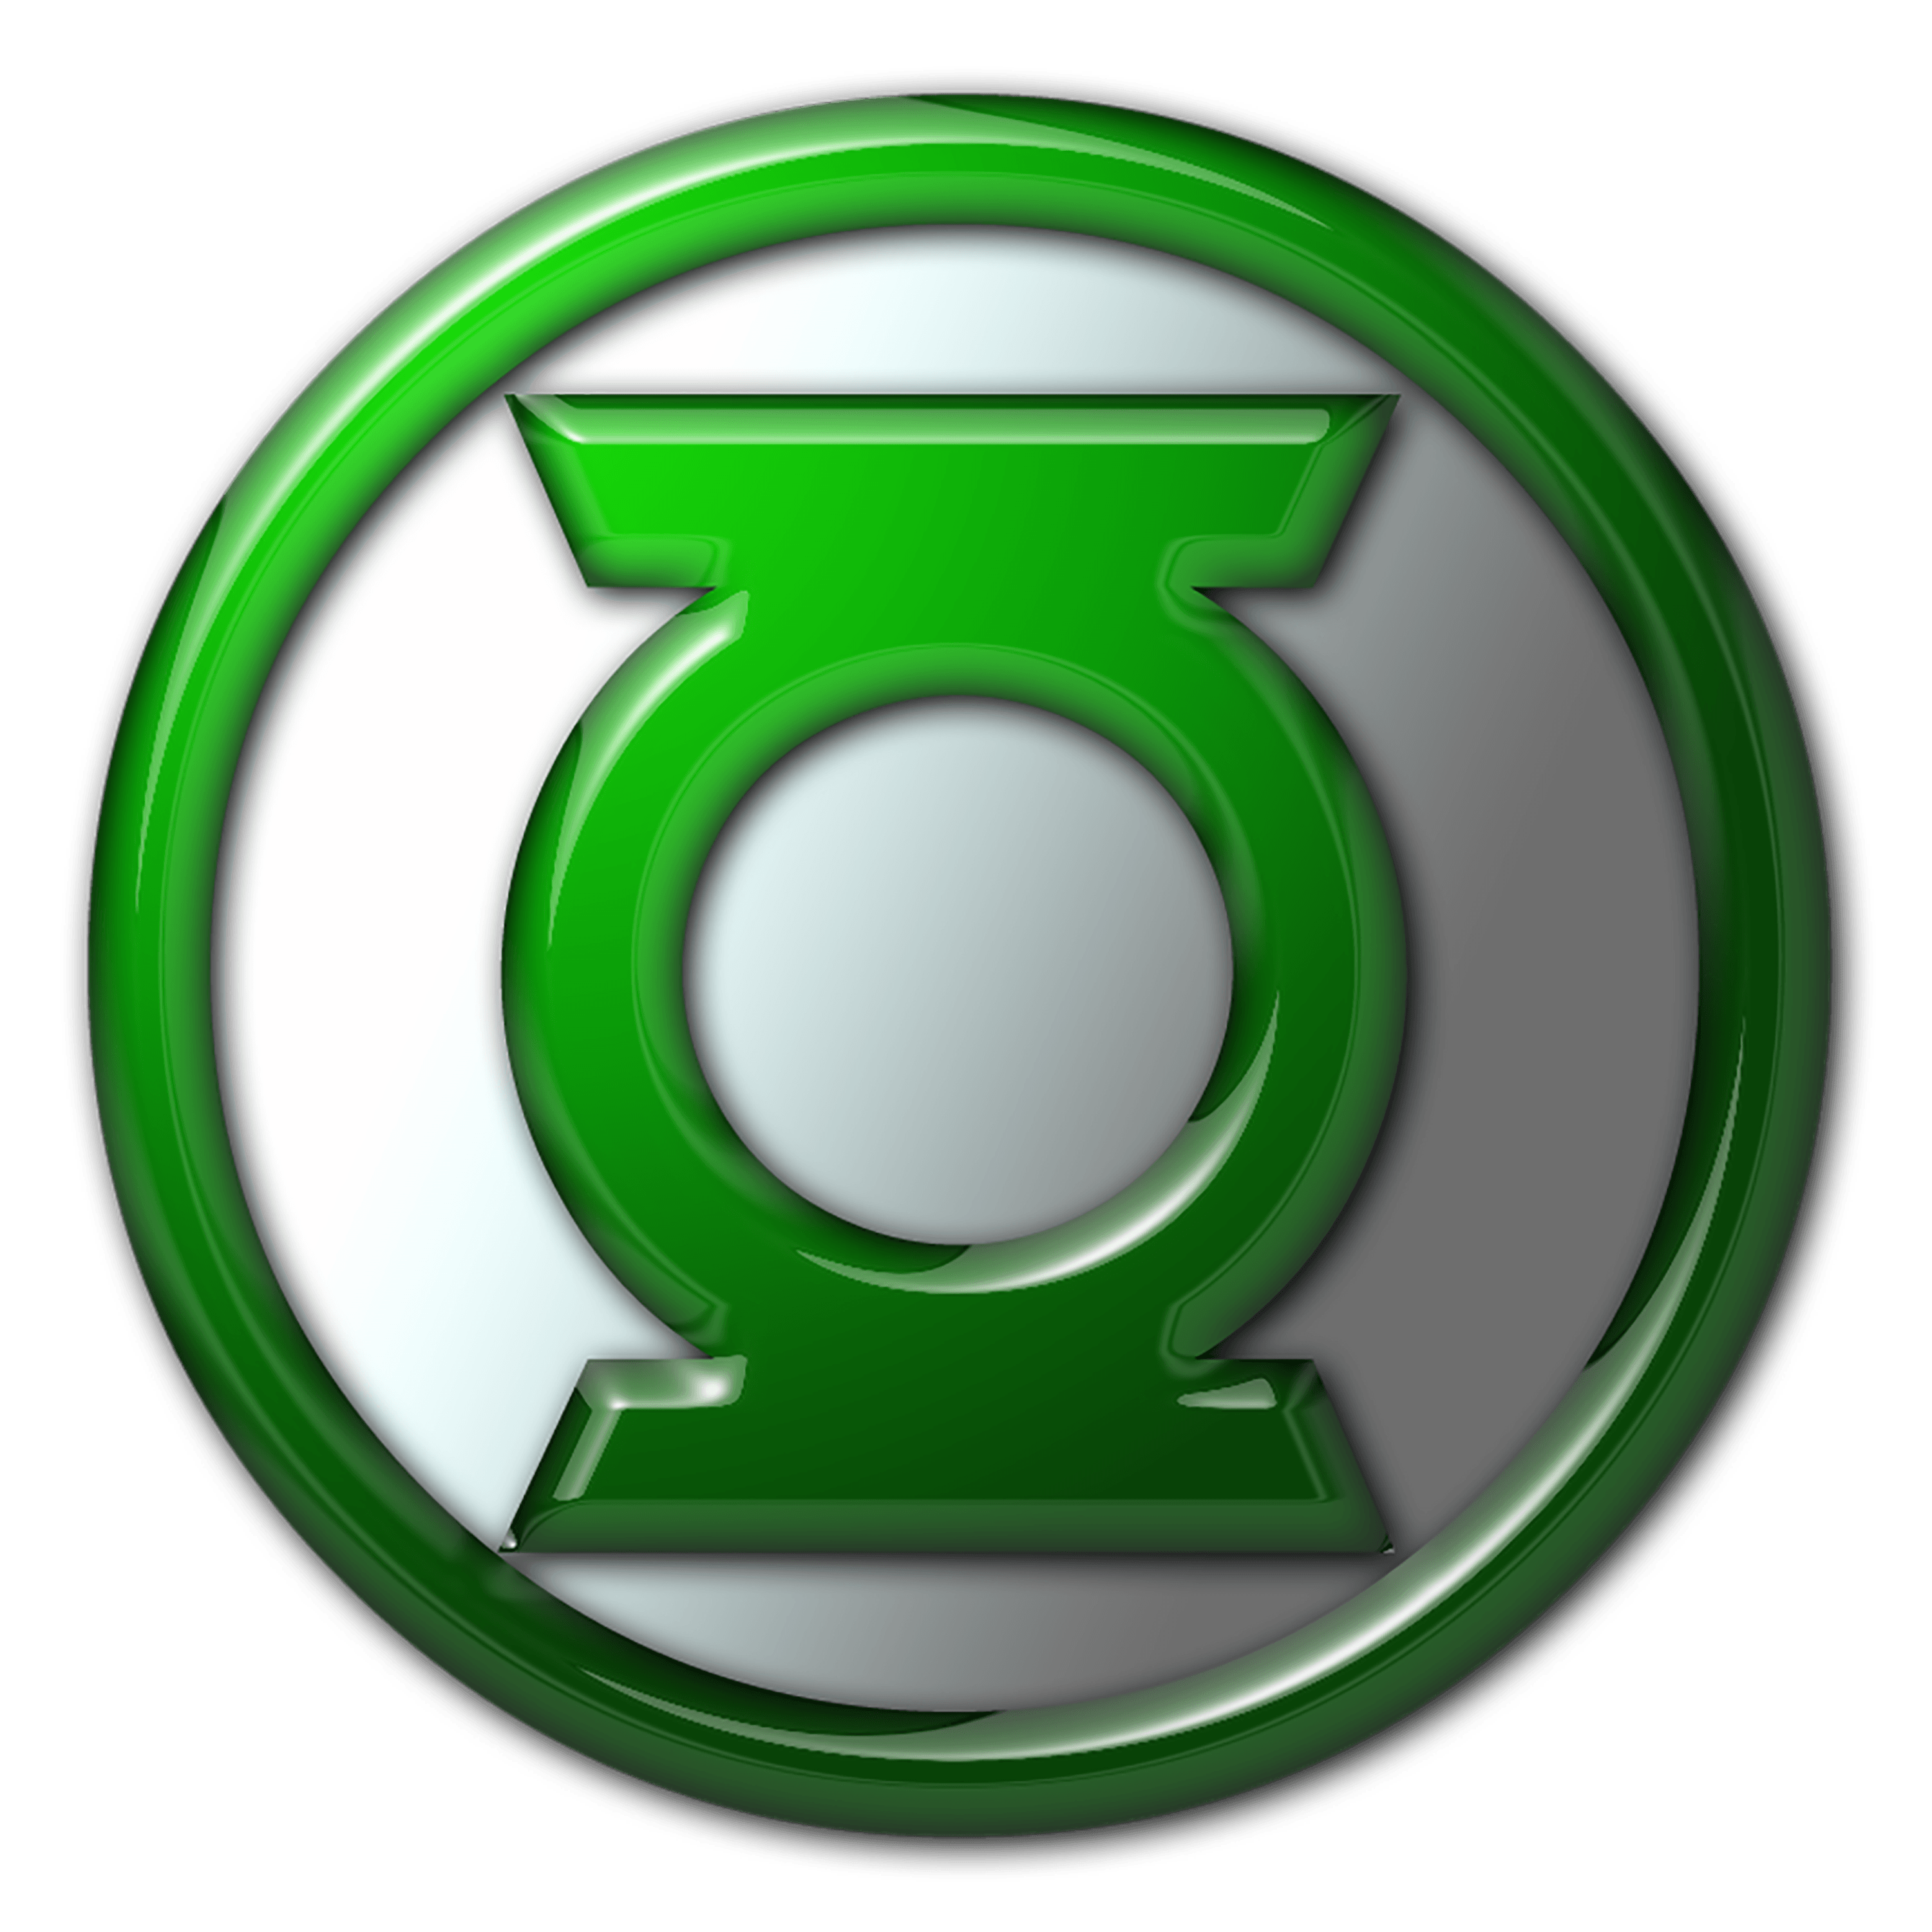 Green Lantern Symbol Logo - Green Lantern Logo created with PhotoShop. | Green Lantern Related ...